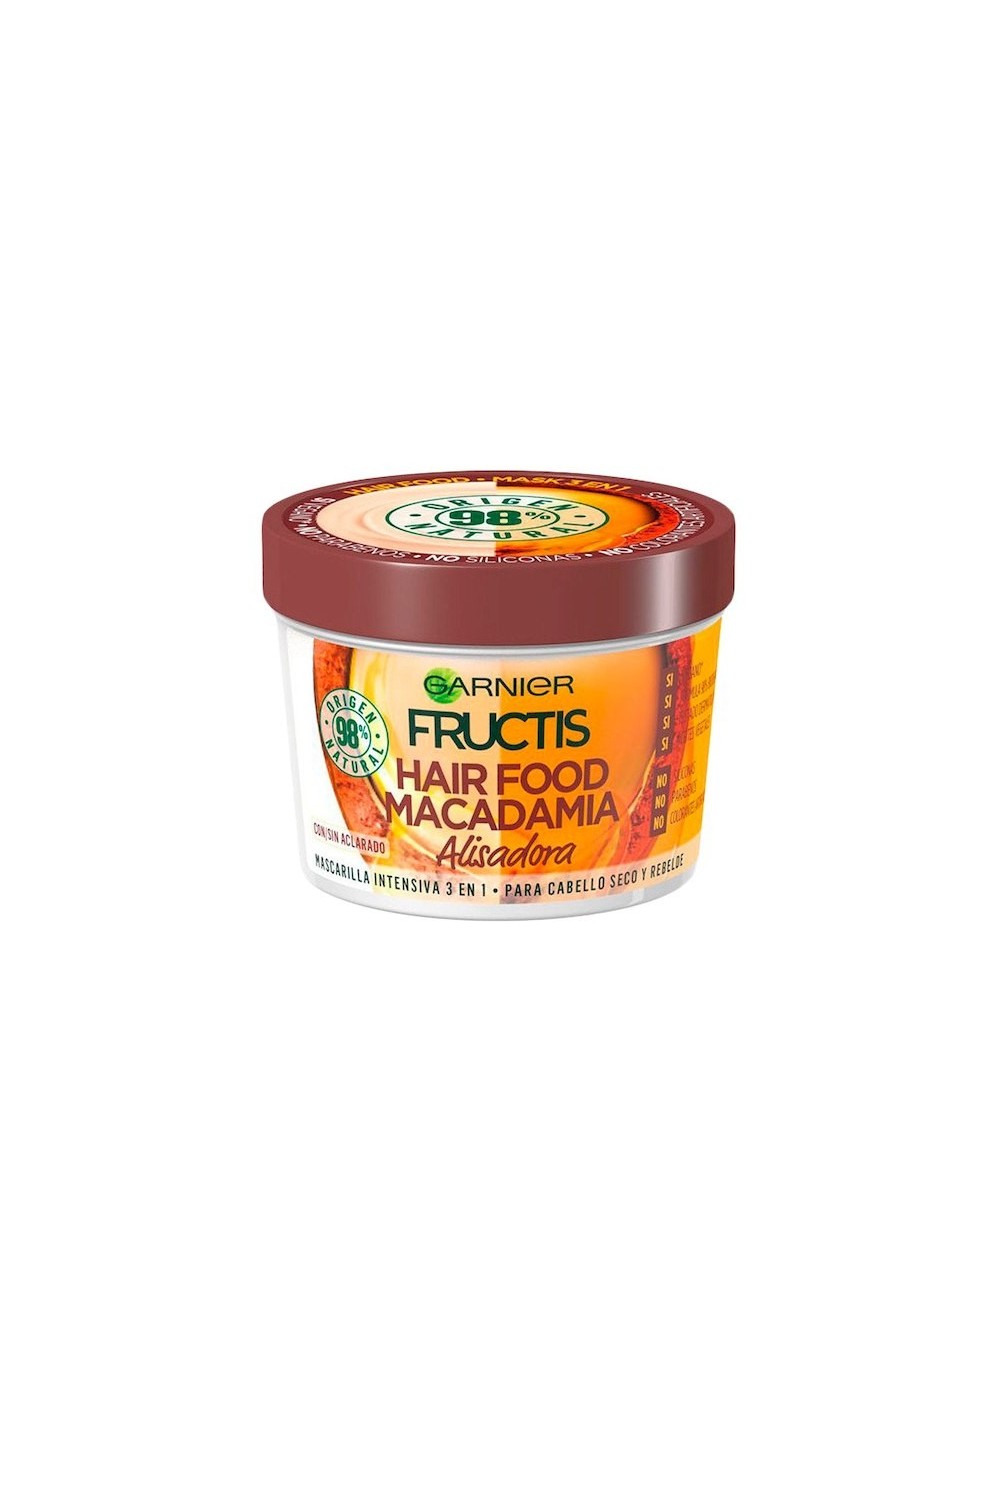 Garnier Fructis Hair Food Macadamia Smoothing Mask 390ml